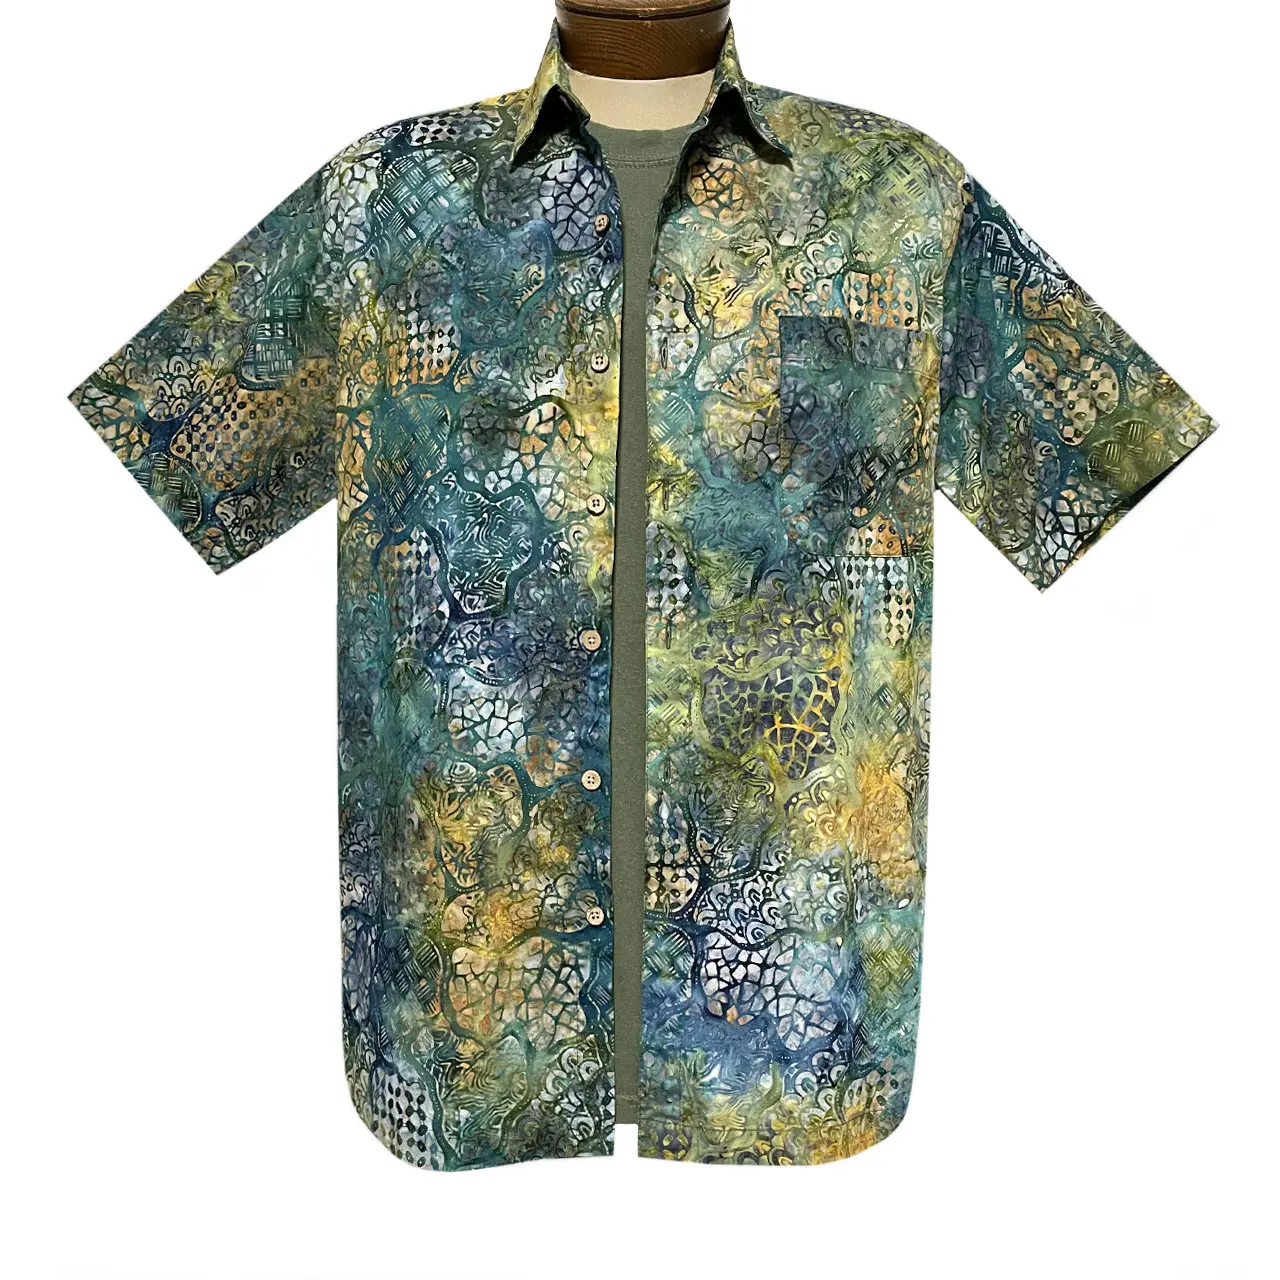 Men\'s R. Options Batik Short Sleeve Cotton Shirt, Cellular Abstract 62347-4  Green/Gold/Blue (XL, ONLY!) - Richard David for Men